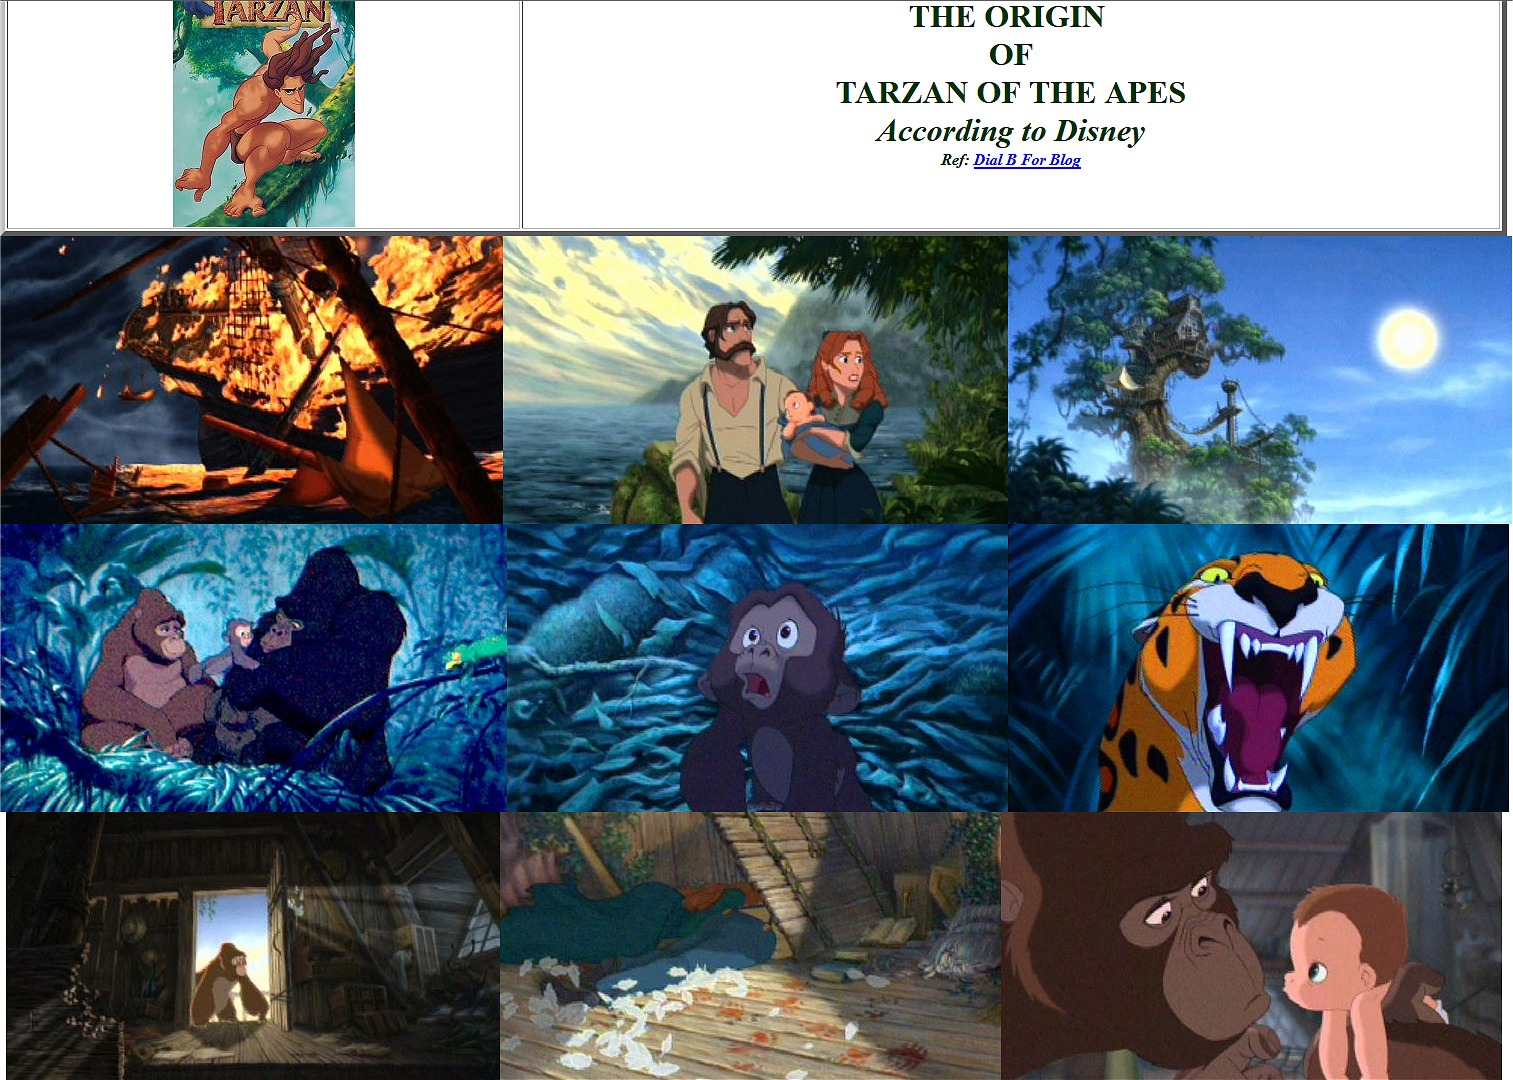 ERBzine 0181: Dum-Dum Tales of Tarzana - Quest For Tarzan - Part 1: Disney